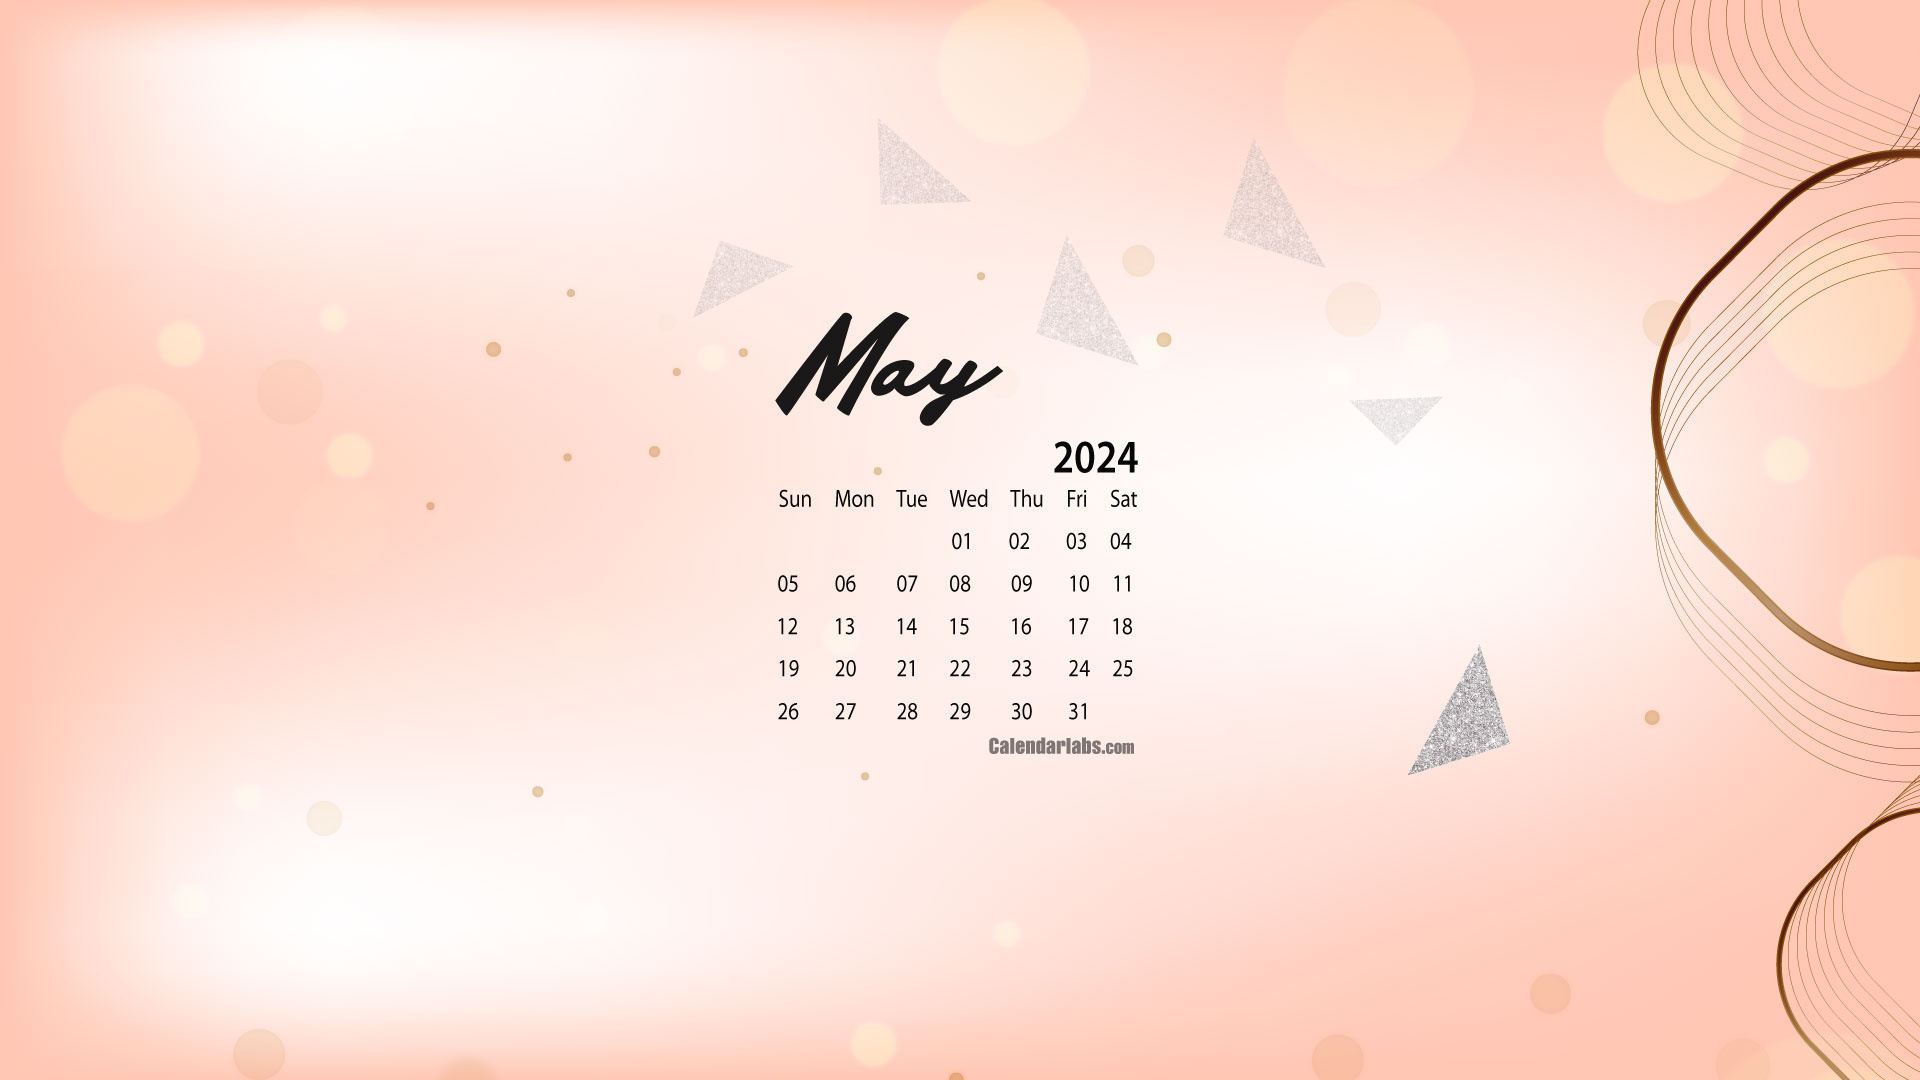 May 2024 Desktop Wallpaper Calendar - Calendarlabs for Free Printable Calendar 2024 May Calendar Lab